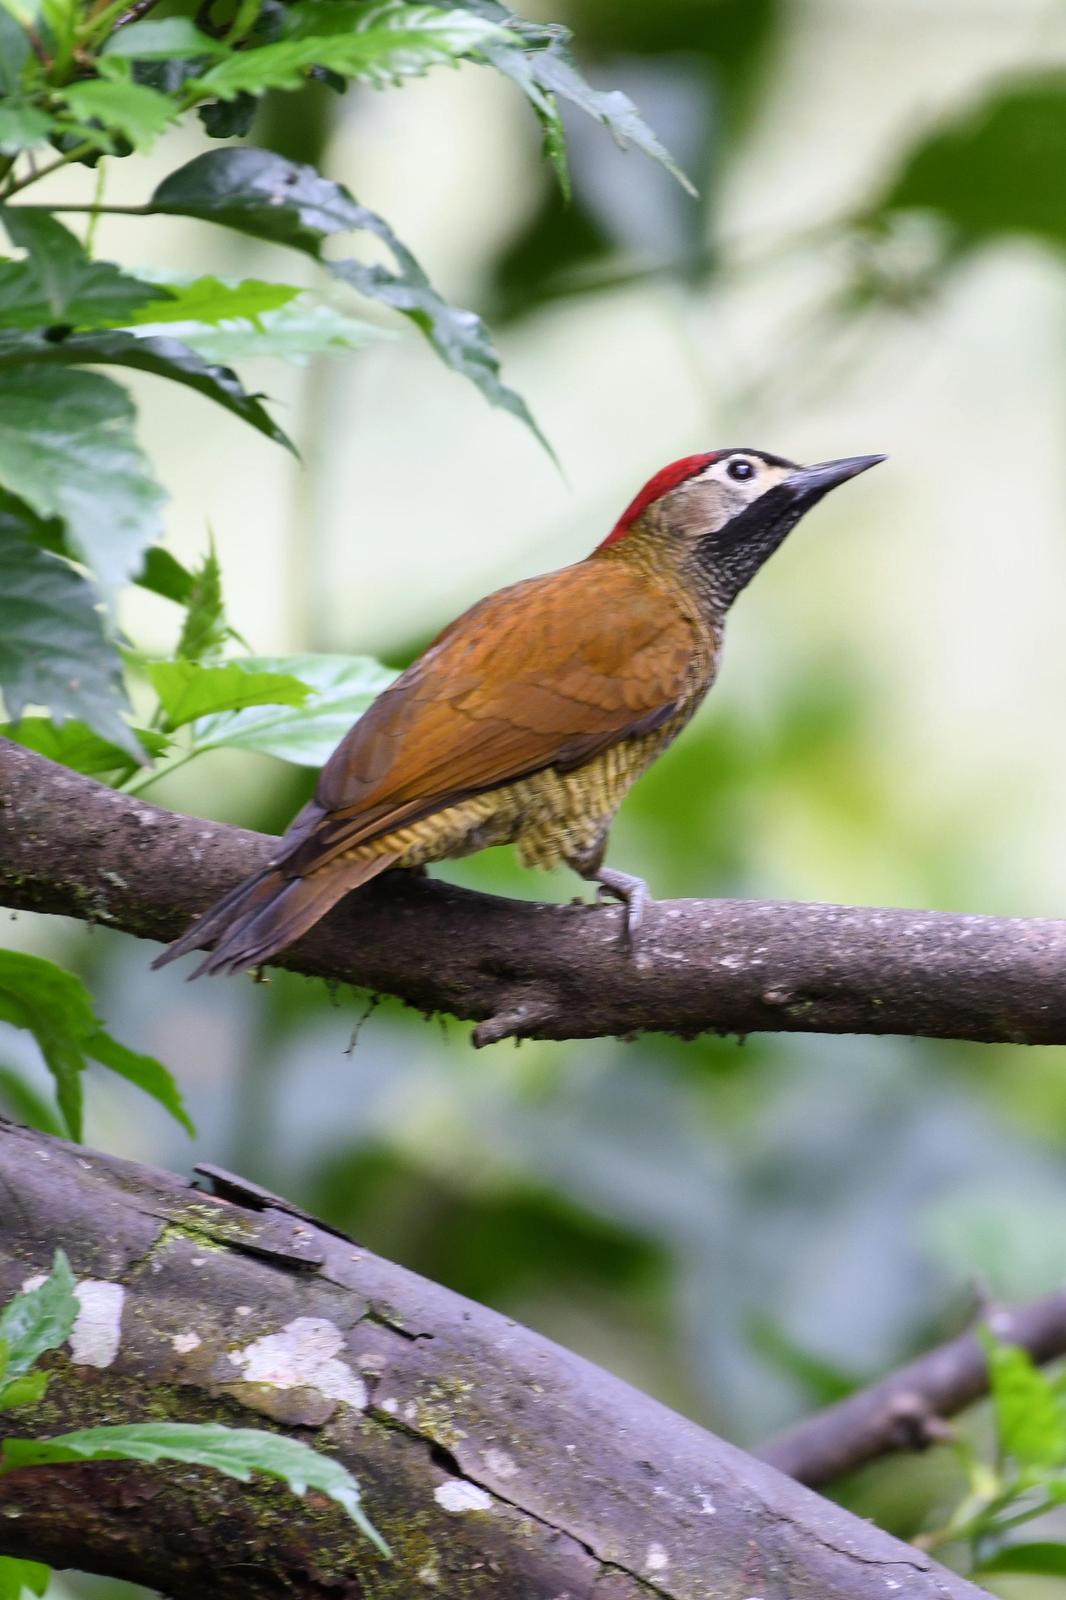 Golden-olive Woodpecker Photo by Ann Doty